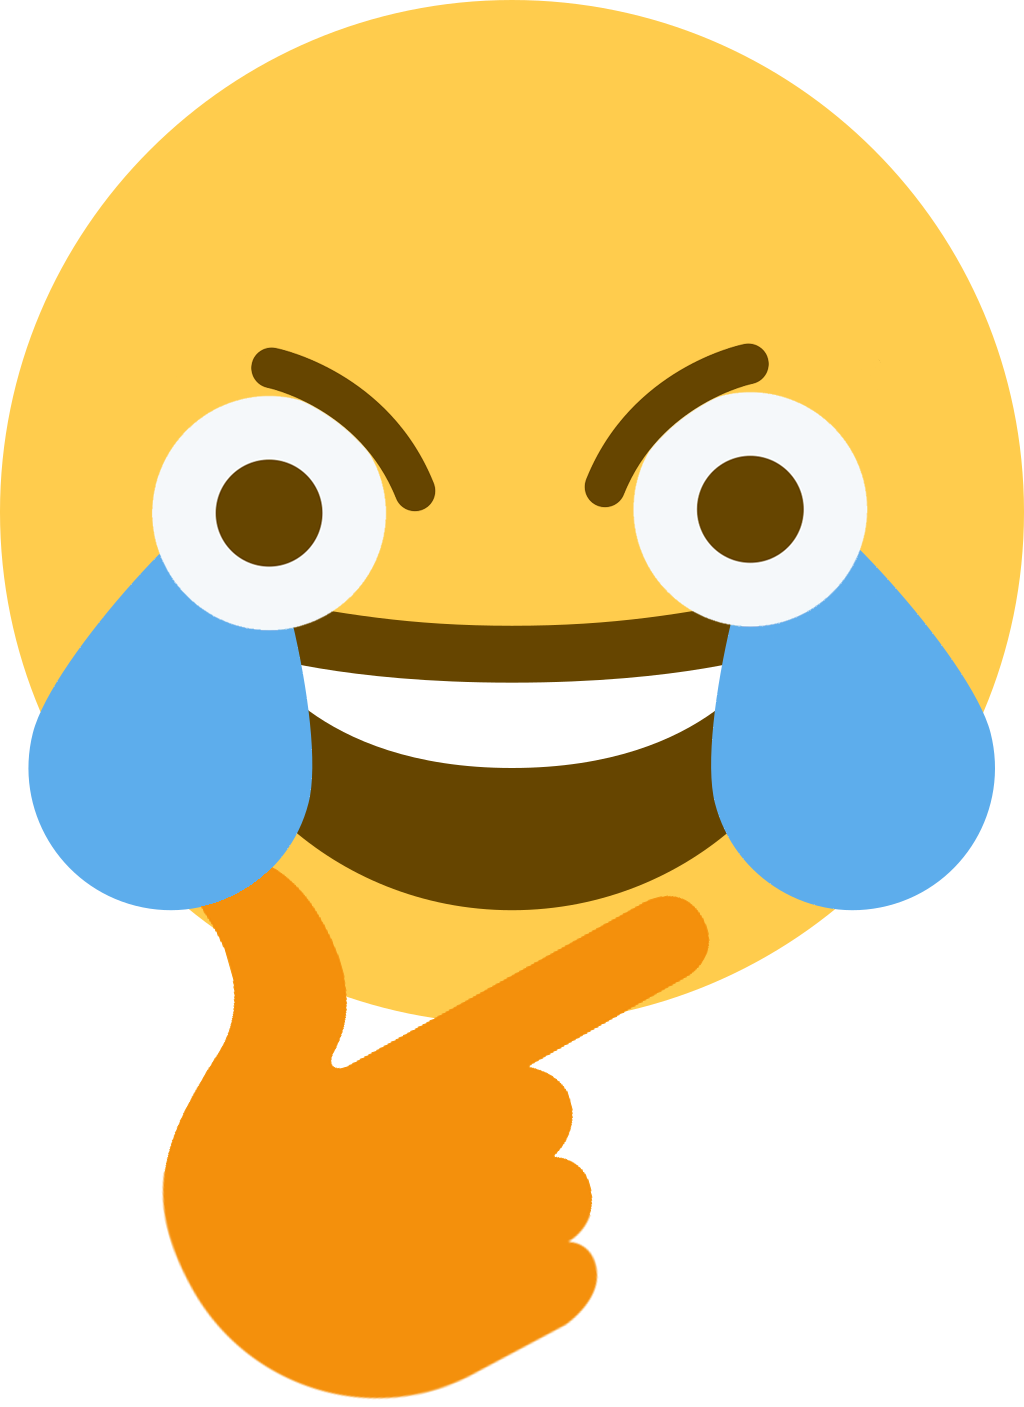 Crying Laughing Emoji PNG HD Quality